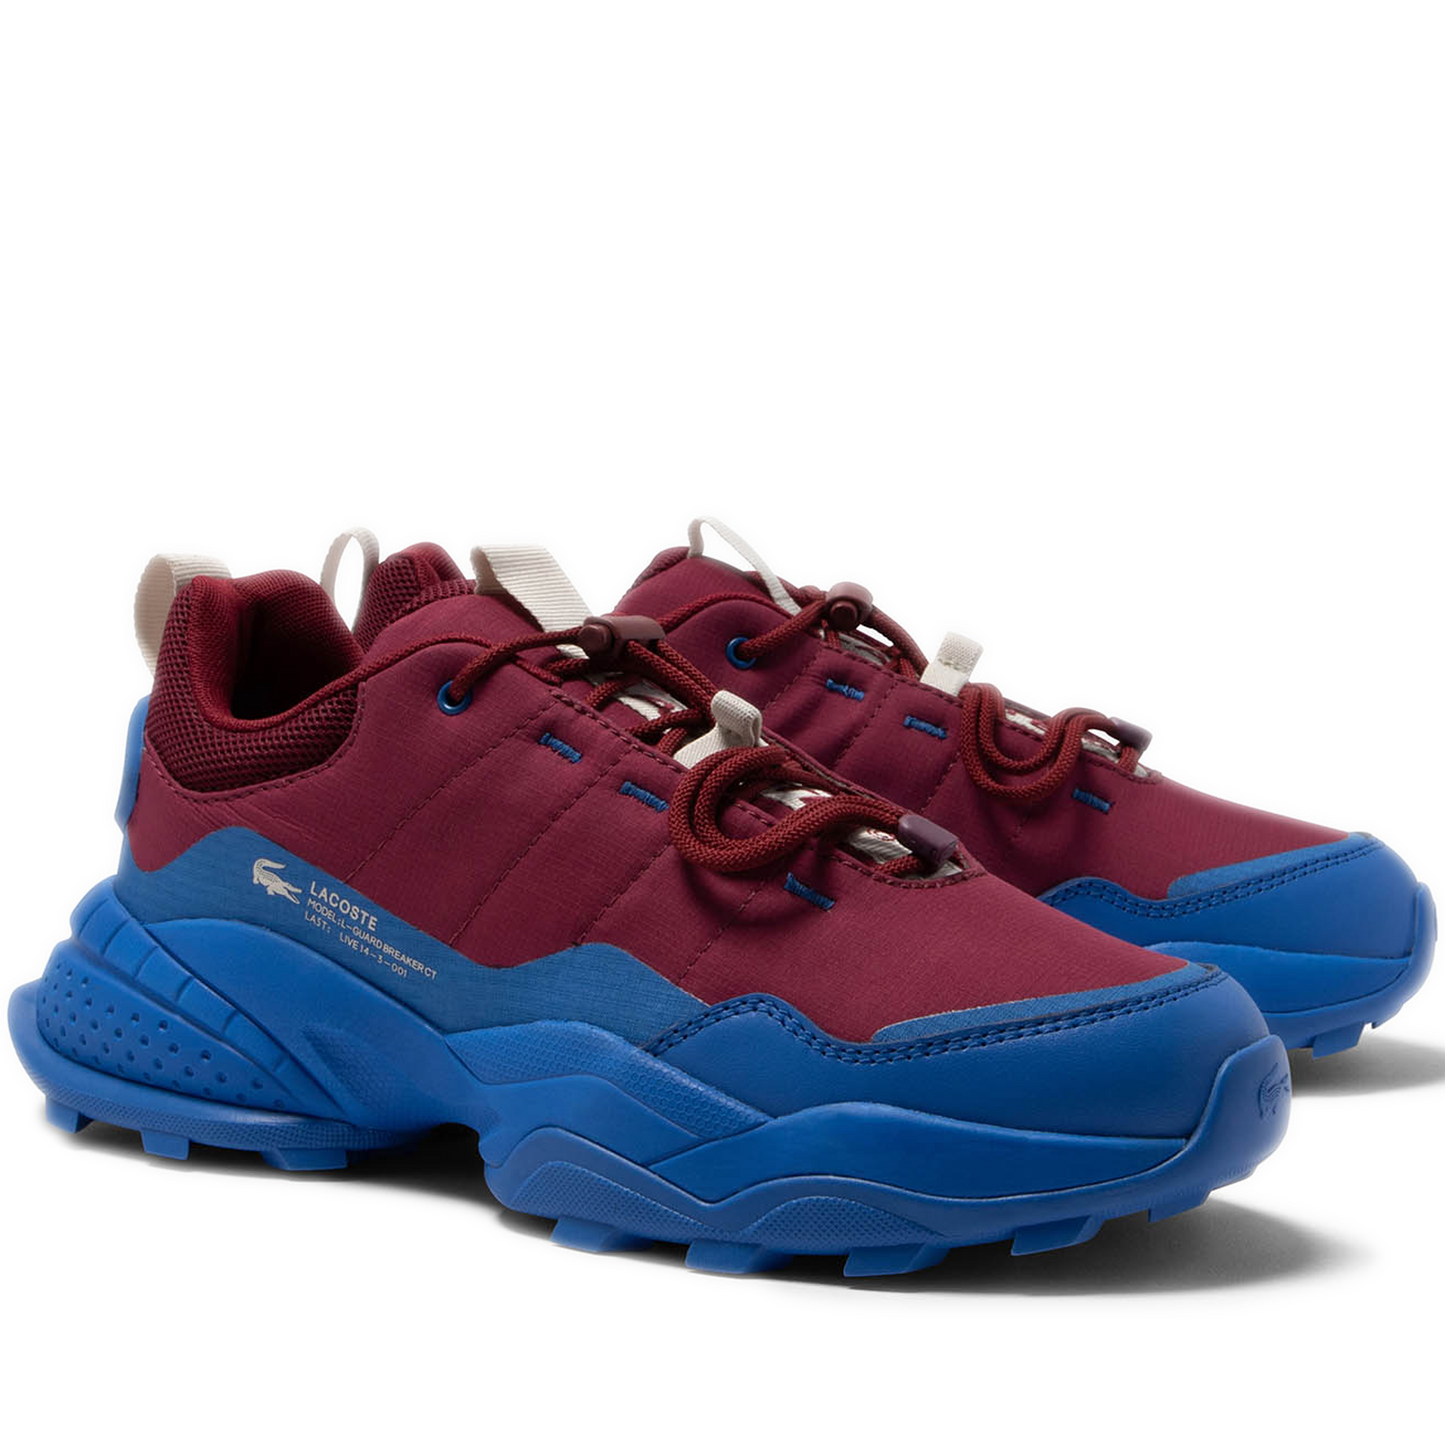 Men's Lacoste L-Guard Breaker CT Textile Outdoor Sneakers - Burgundy/ Blue